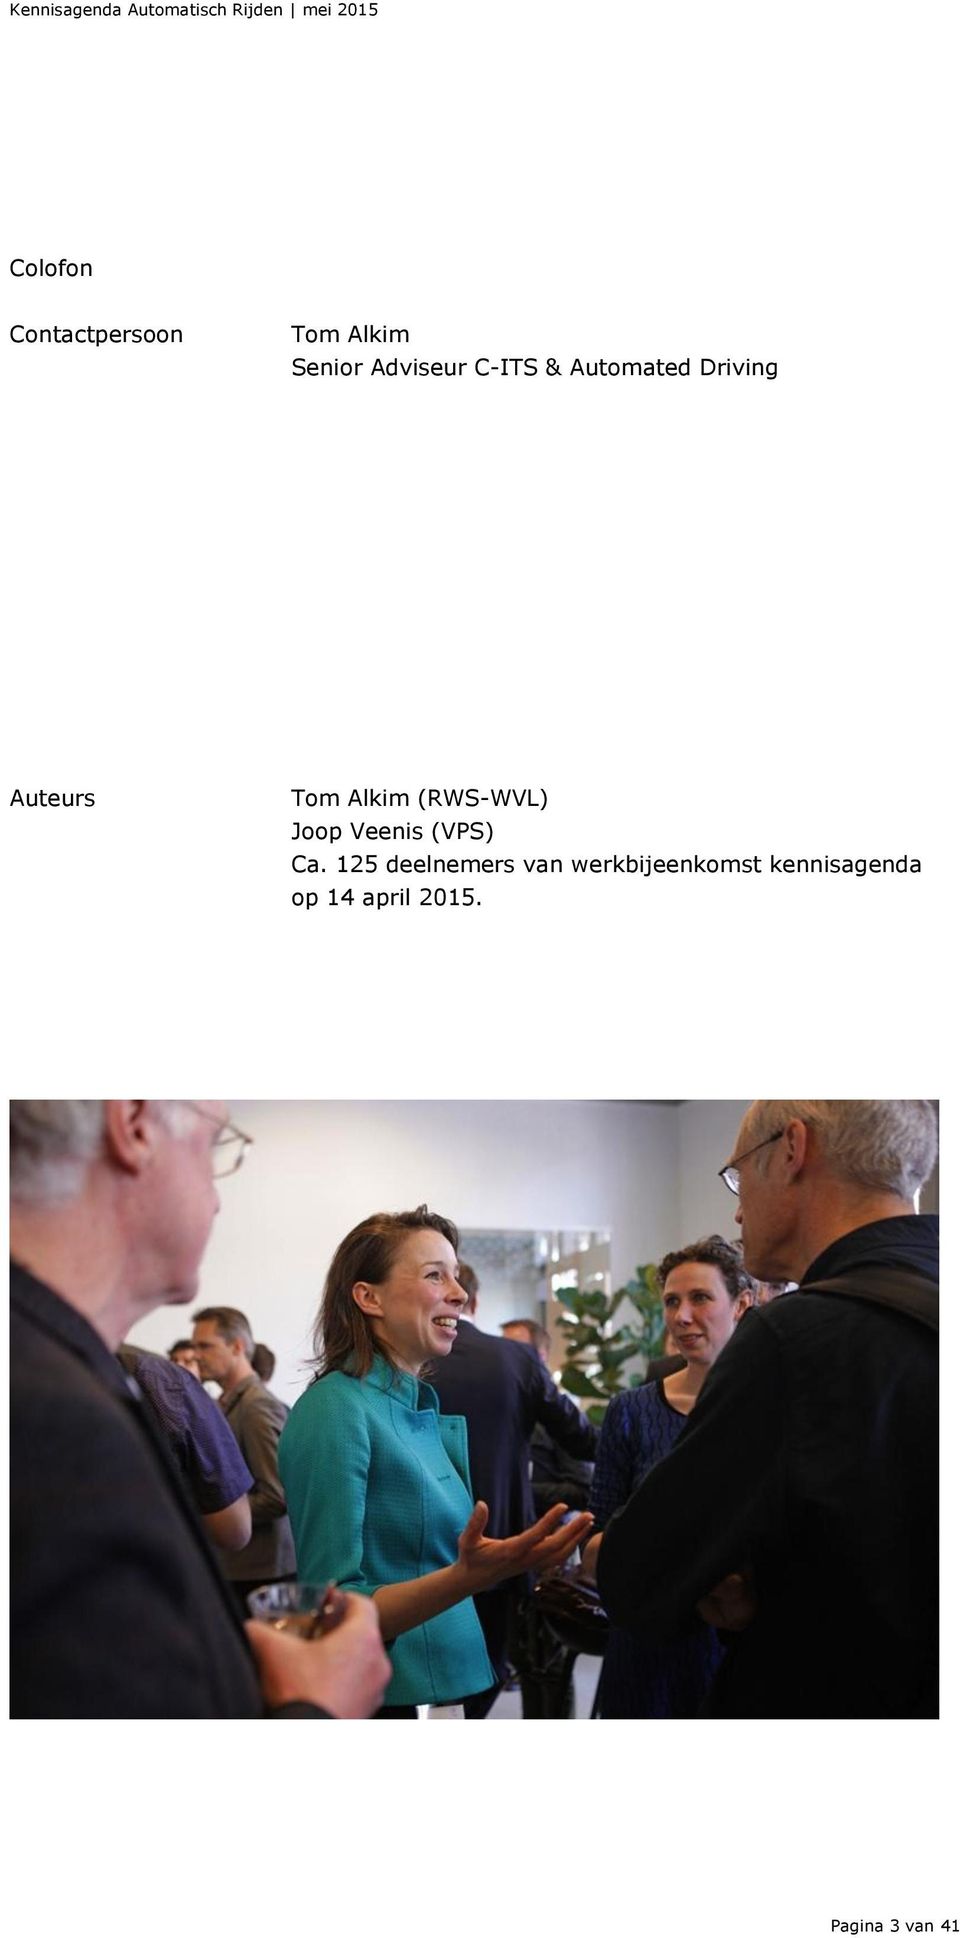 tom.alkim@rws.nl Auteurs Tom Alkim (RWS-WVL) Joop Veenis (VPS) Ca.